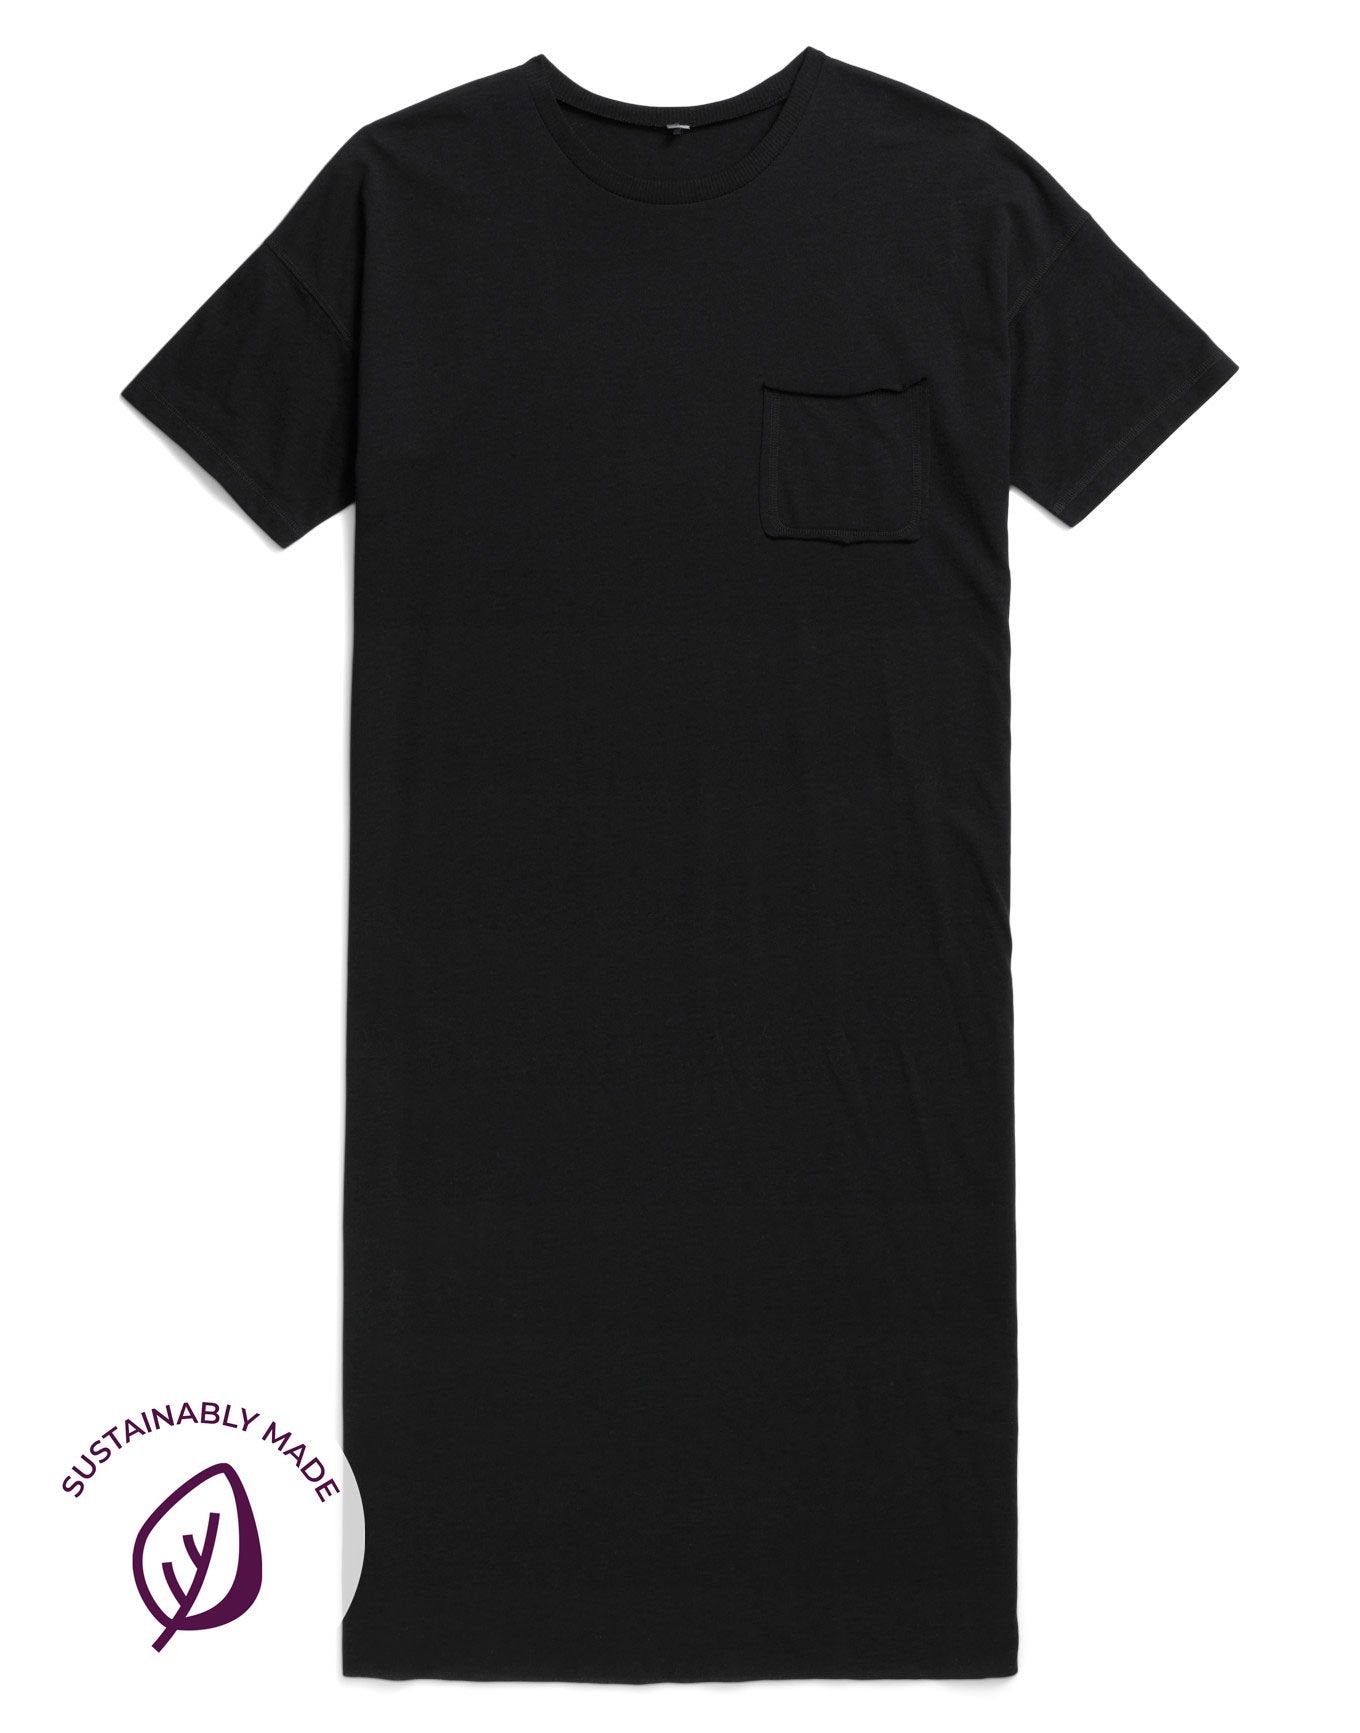 Adore Me Devyn Knit Sleepshirt in color Jet Black and shape sleepshirt